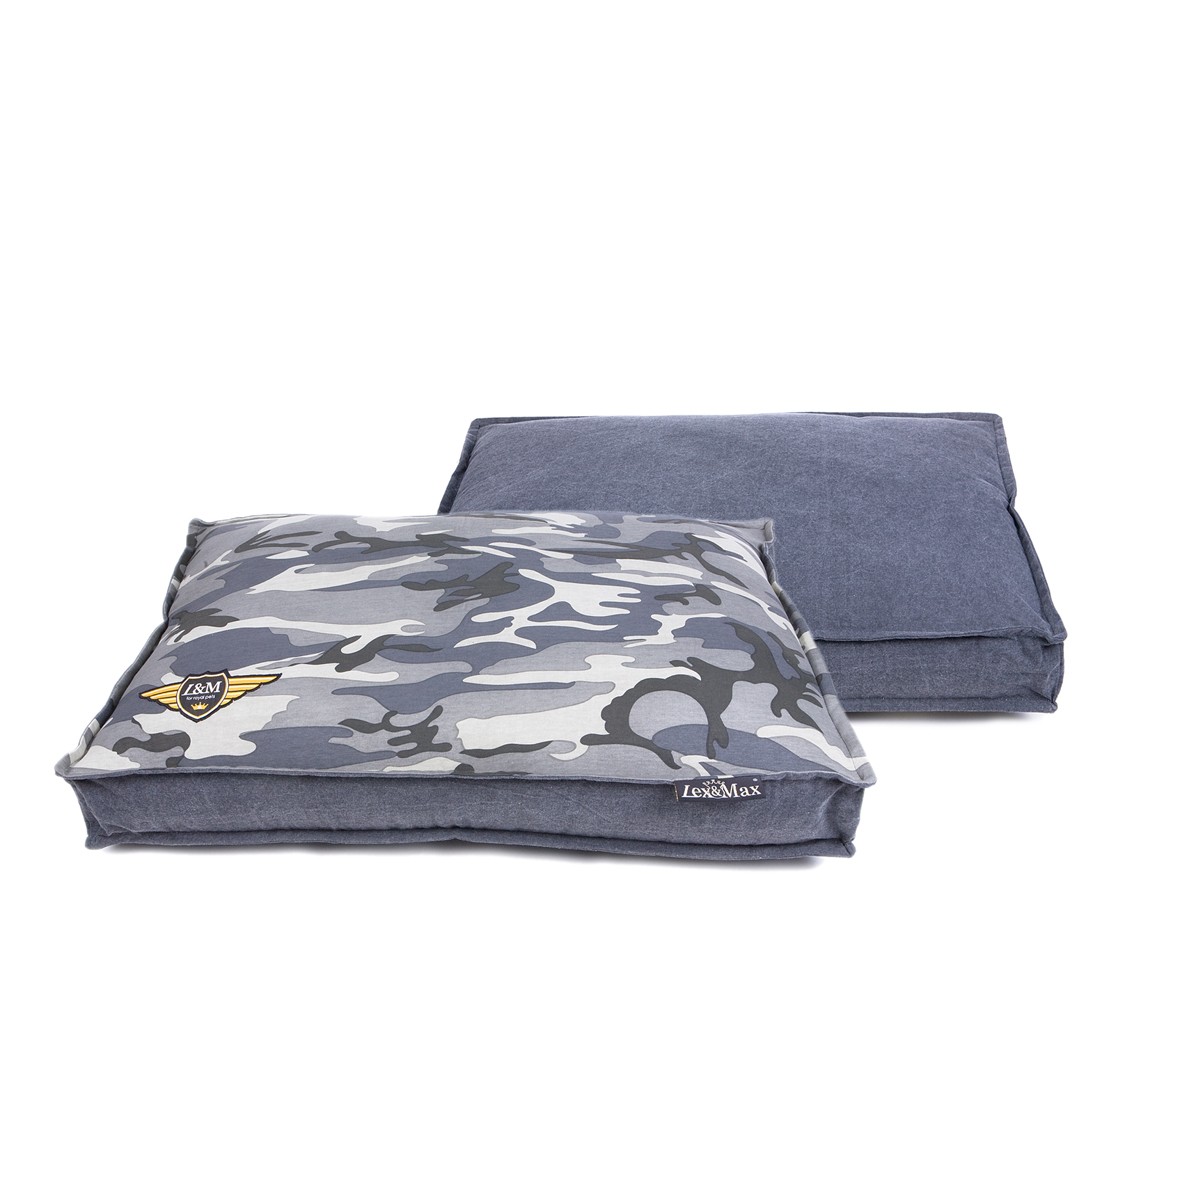 Lex & Max Luxusní potah na pelíšek pro psa Lex & Max Army 75 x 50 cm | šedý